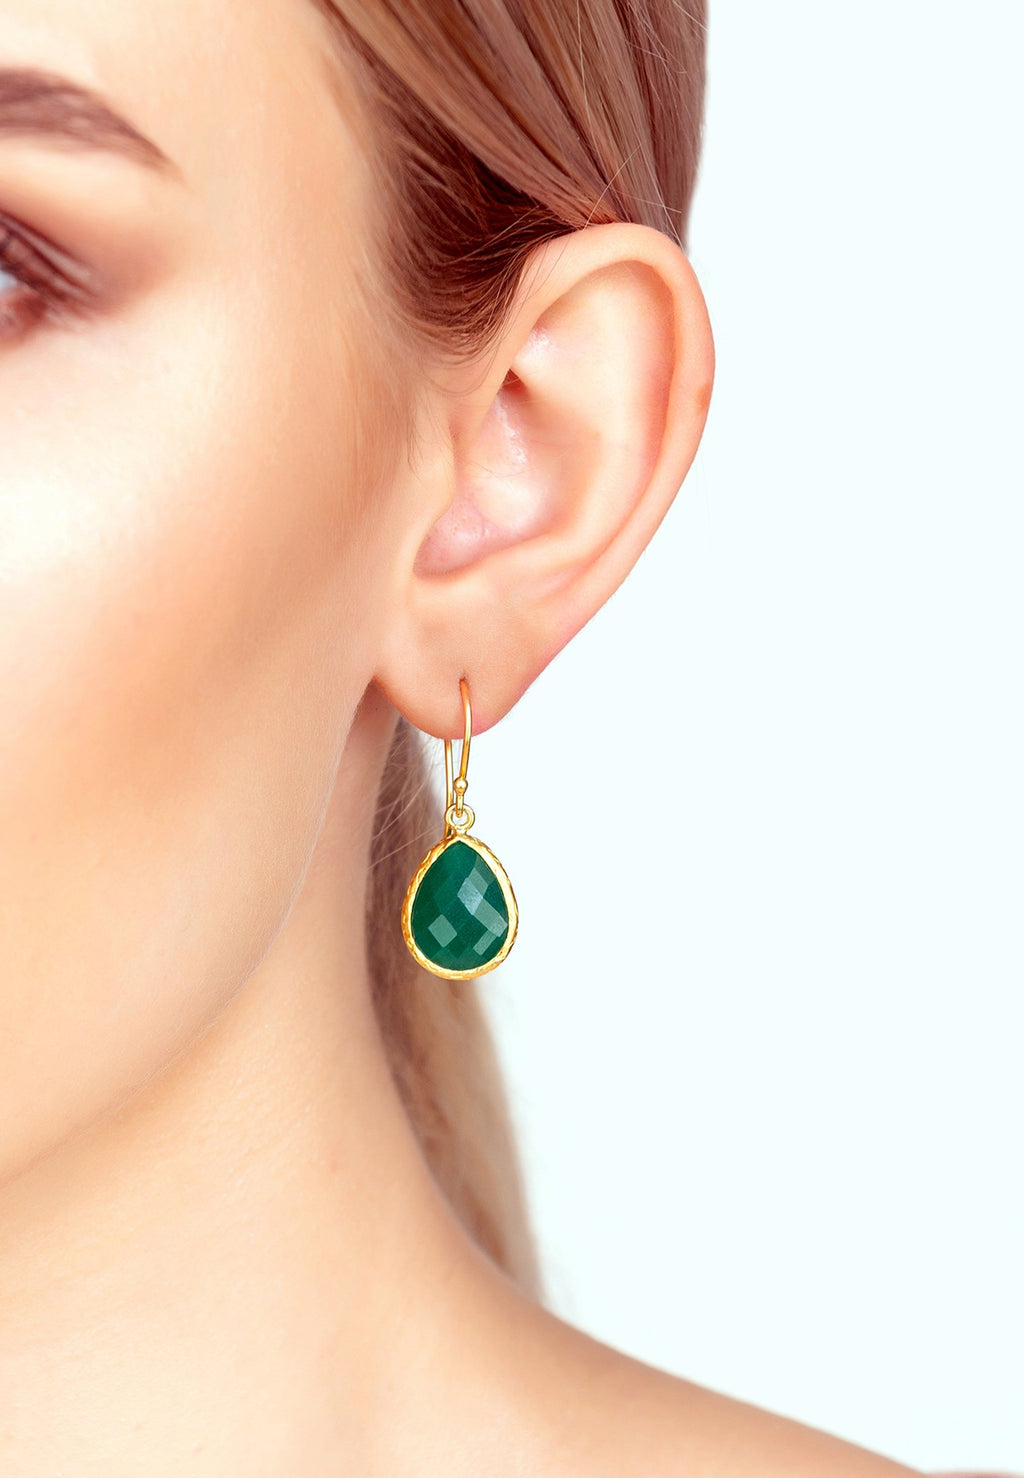 Petite Drop Earring Green Onyx Gold